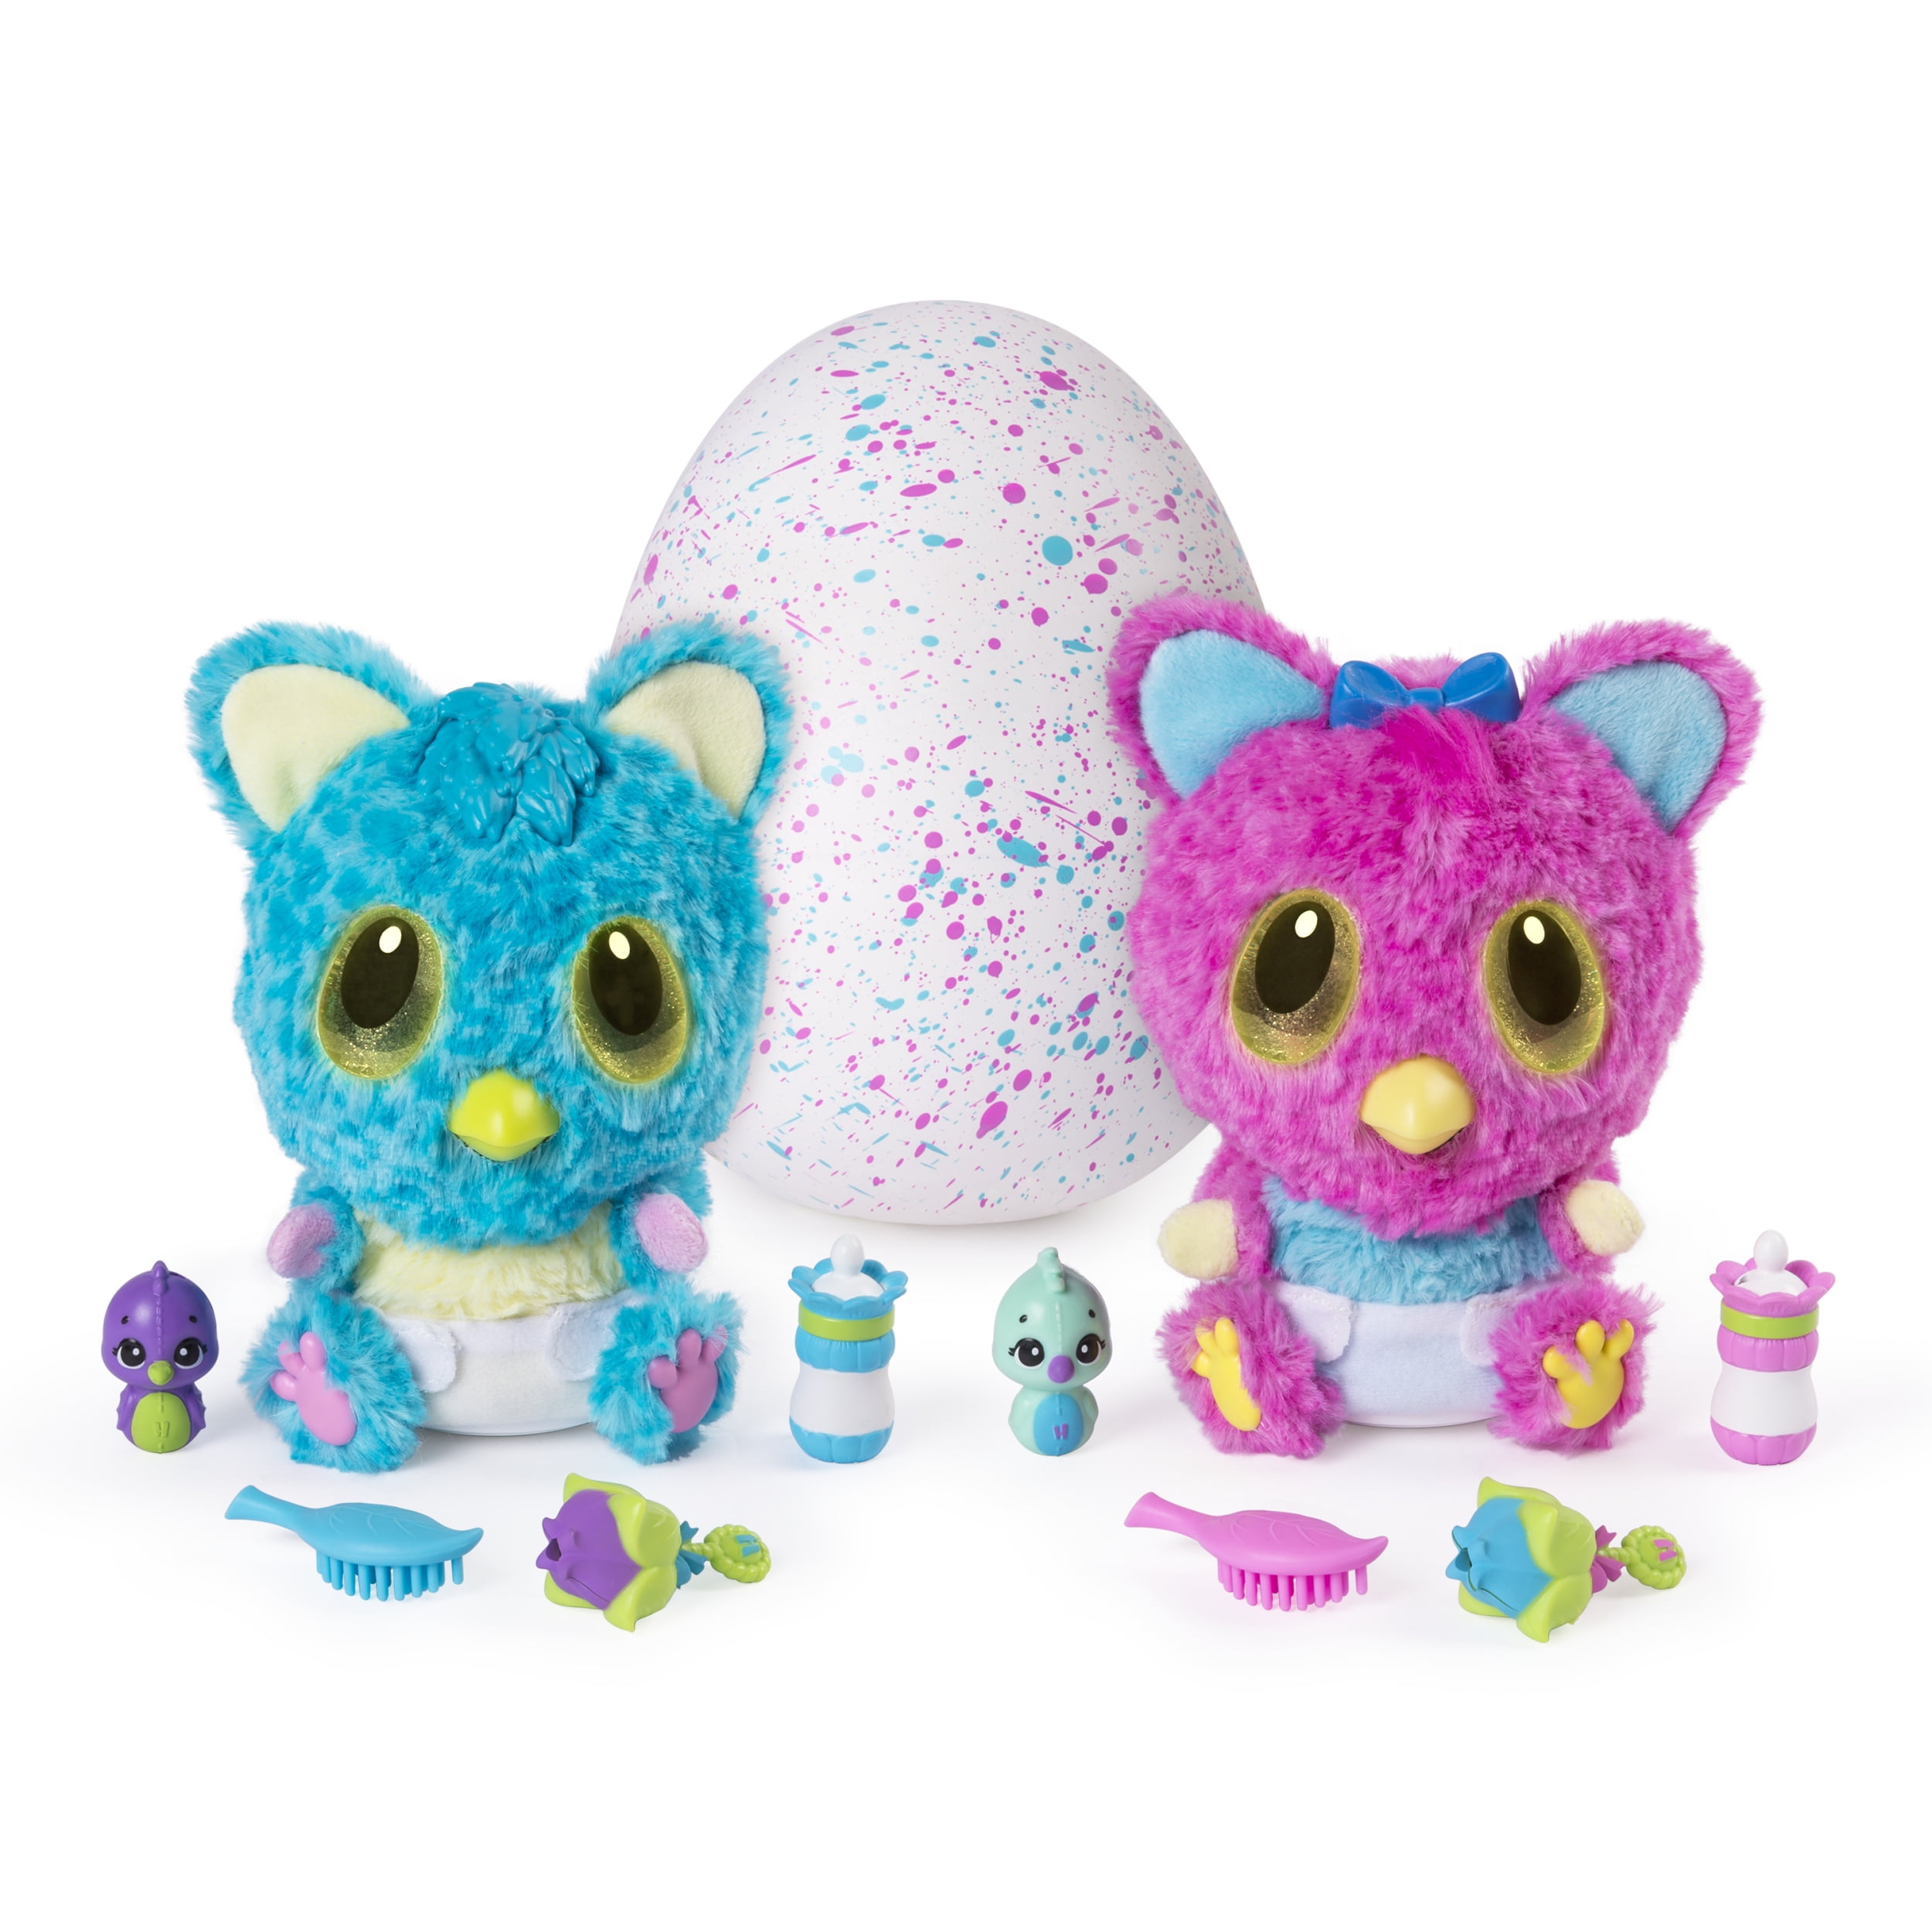 for sale online Hatchimals HatchiBabies Surprise Egg with Interactive Pet 6046467 